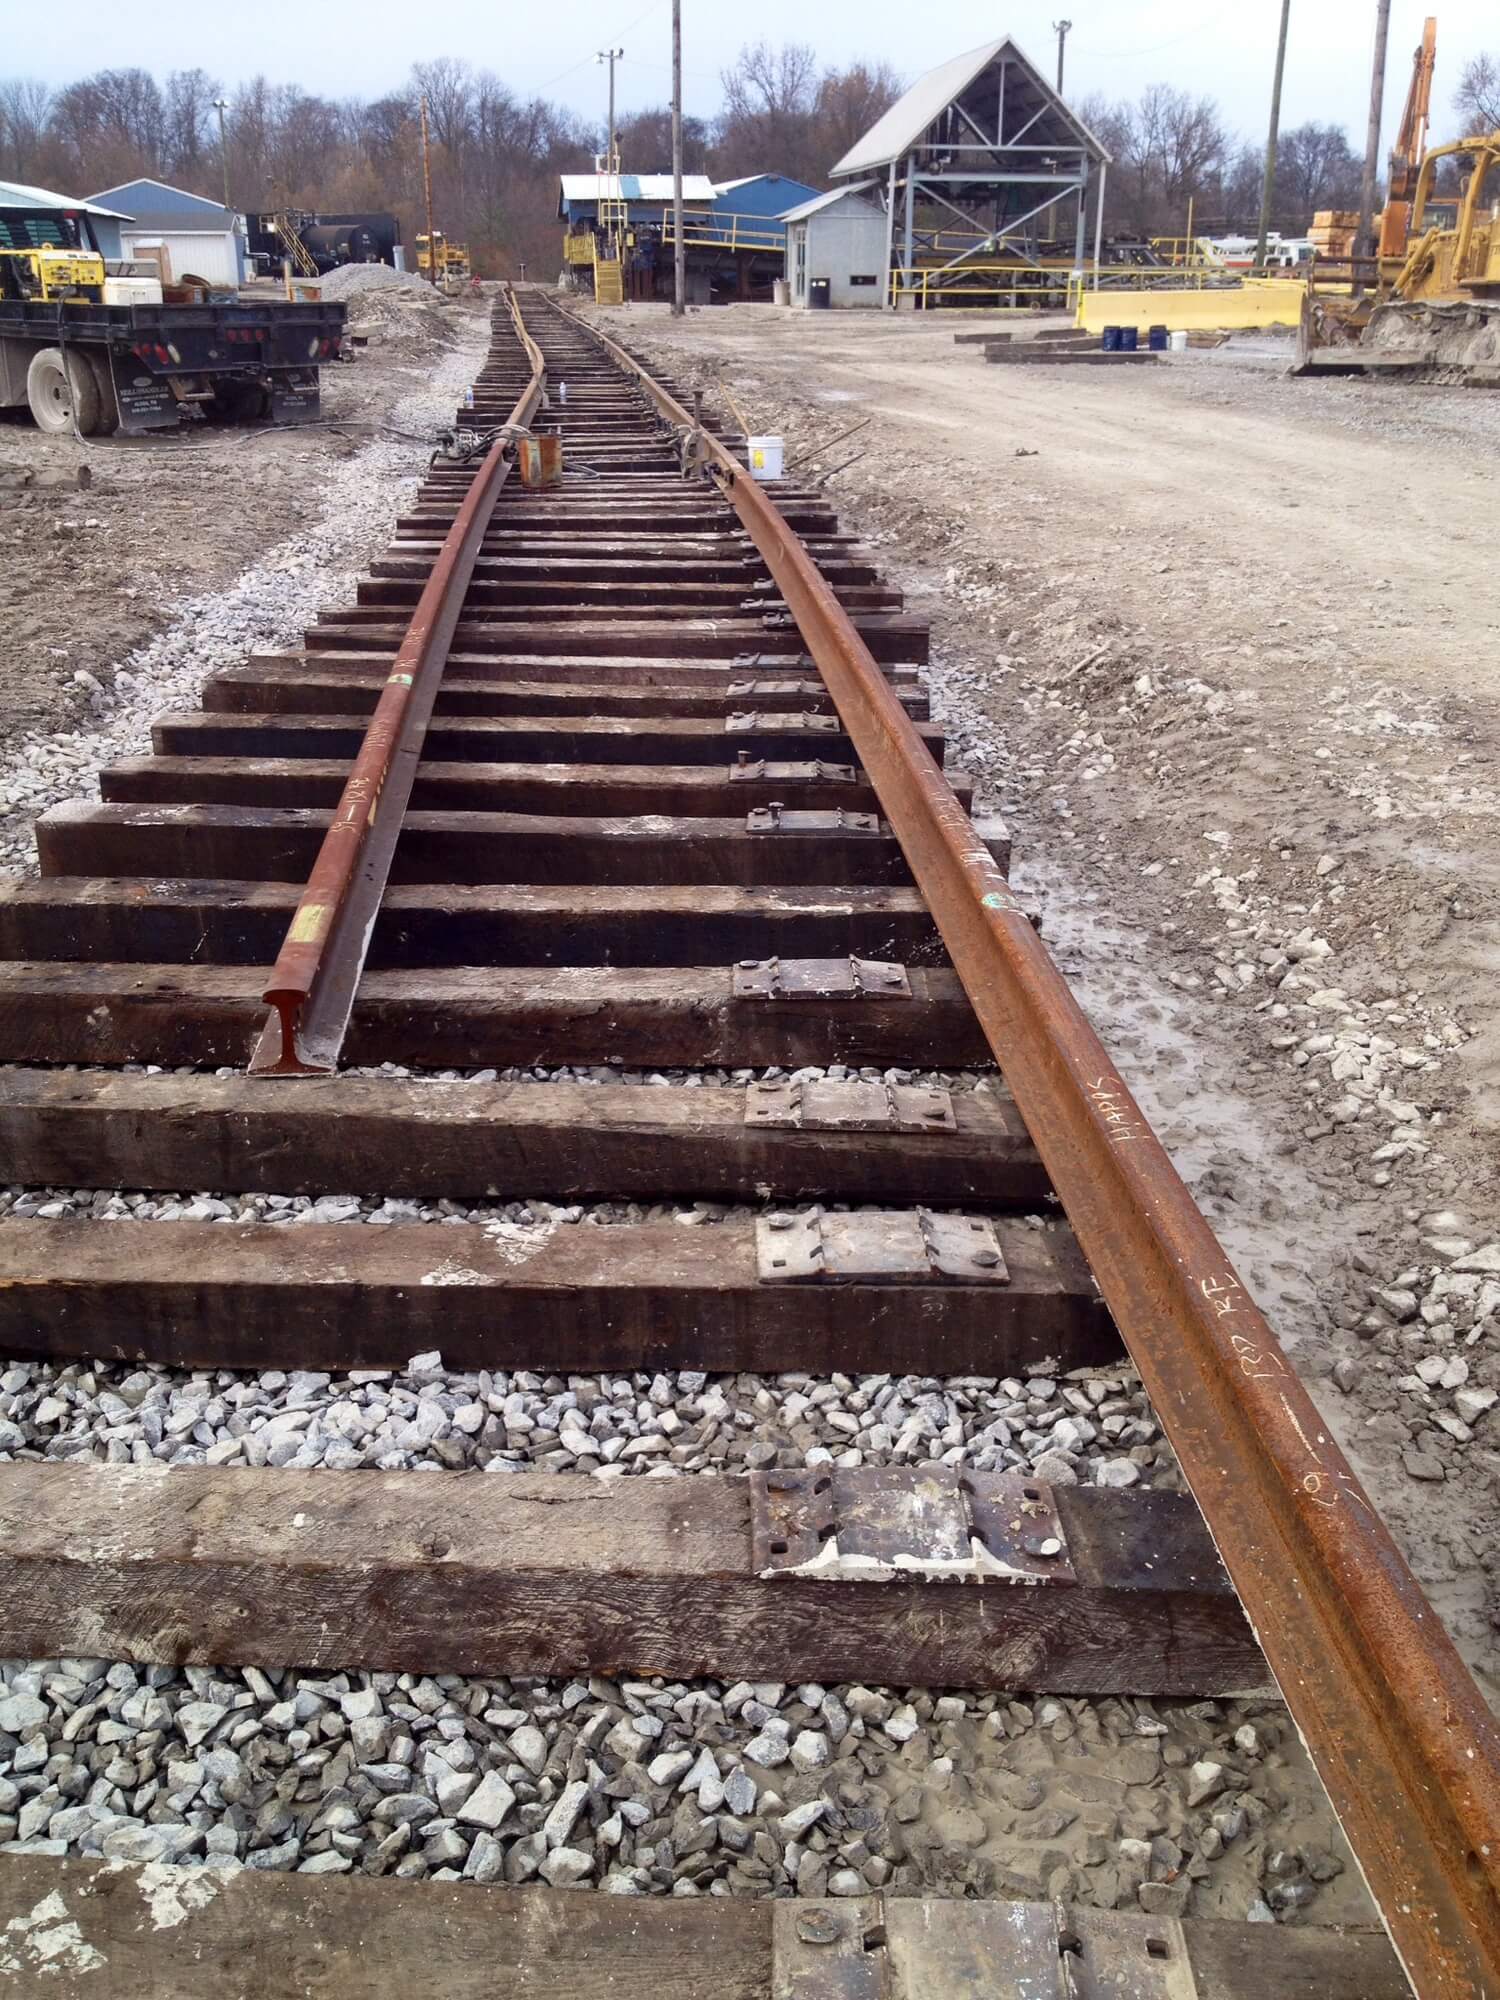 Railroad work - the source of materials at Rail Yard Studios